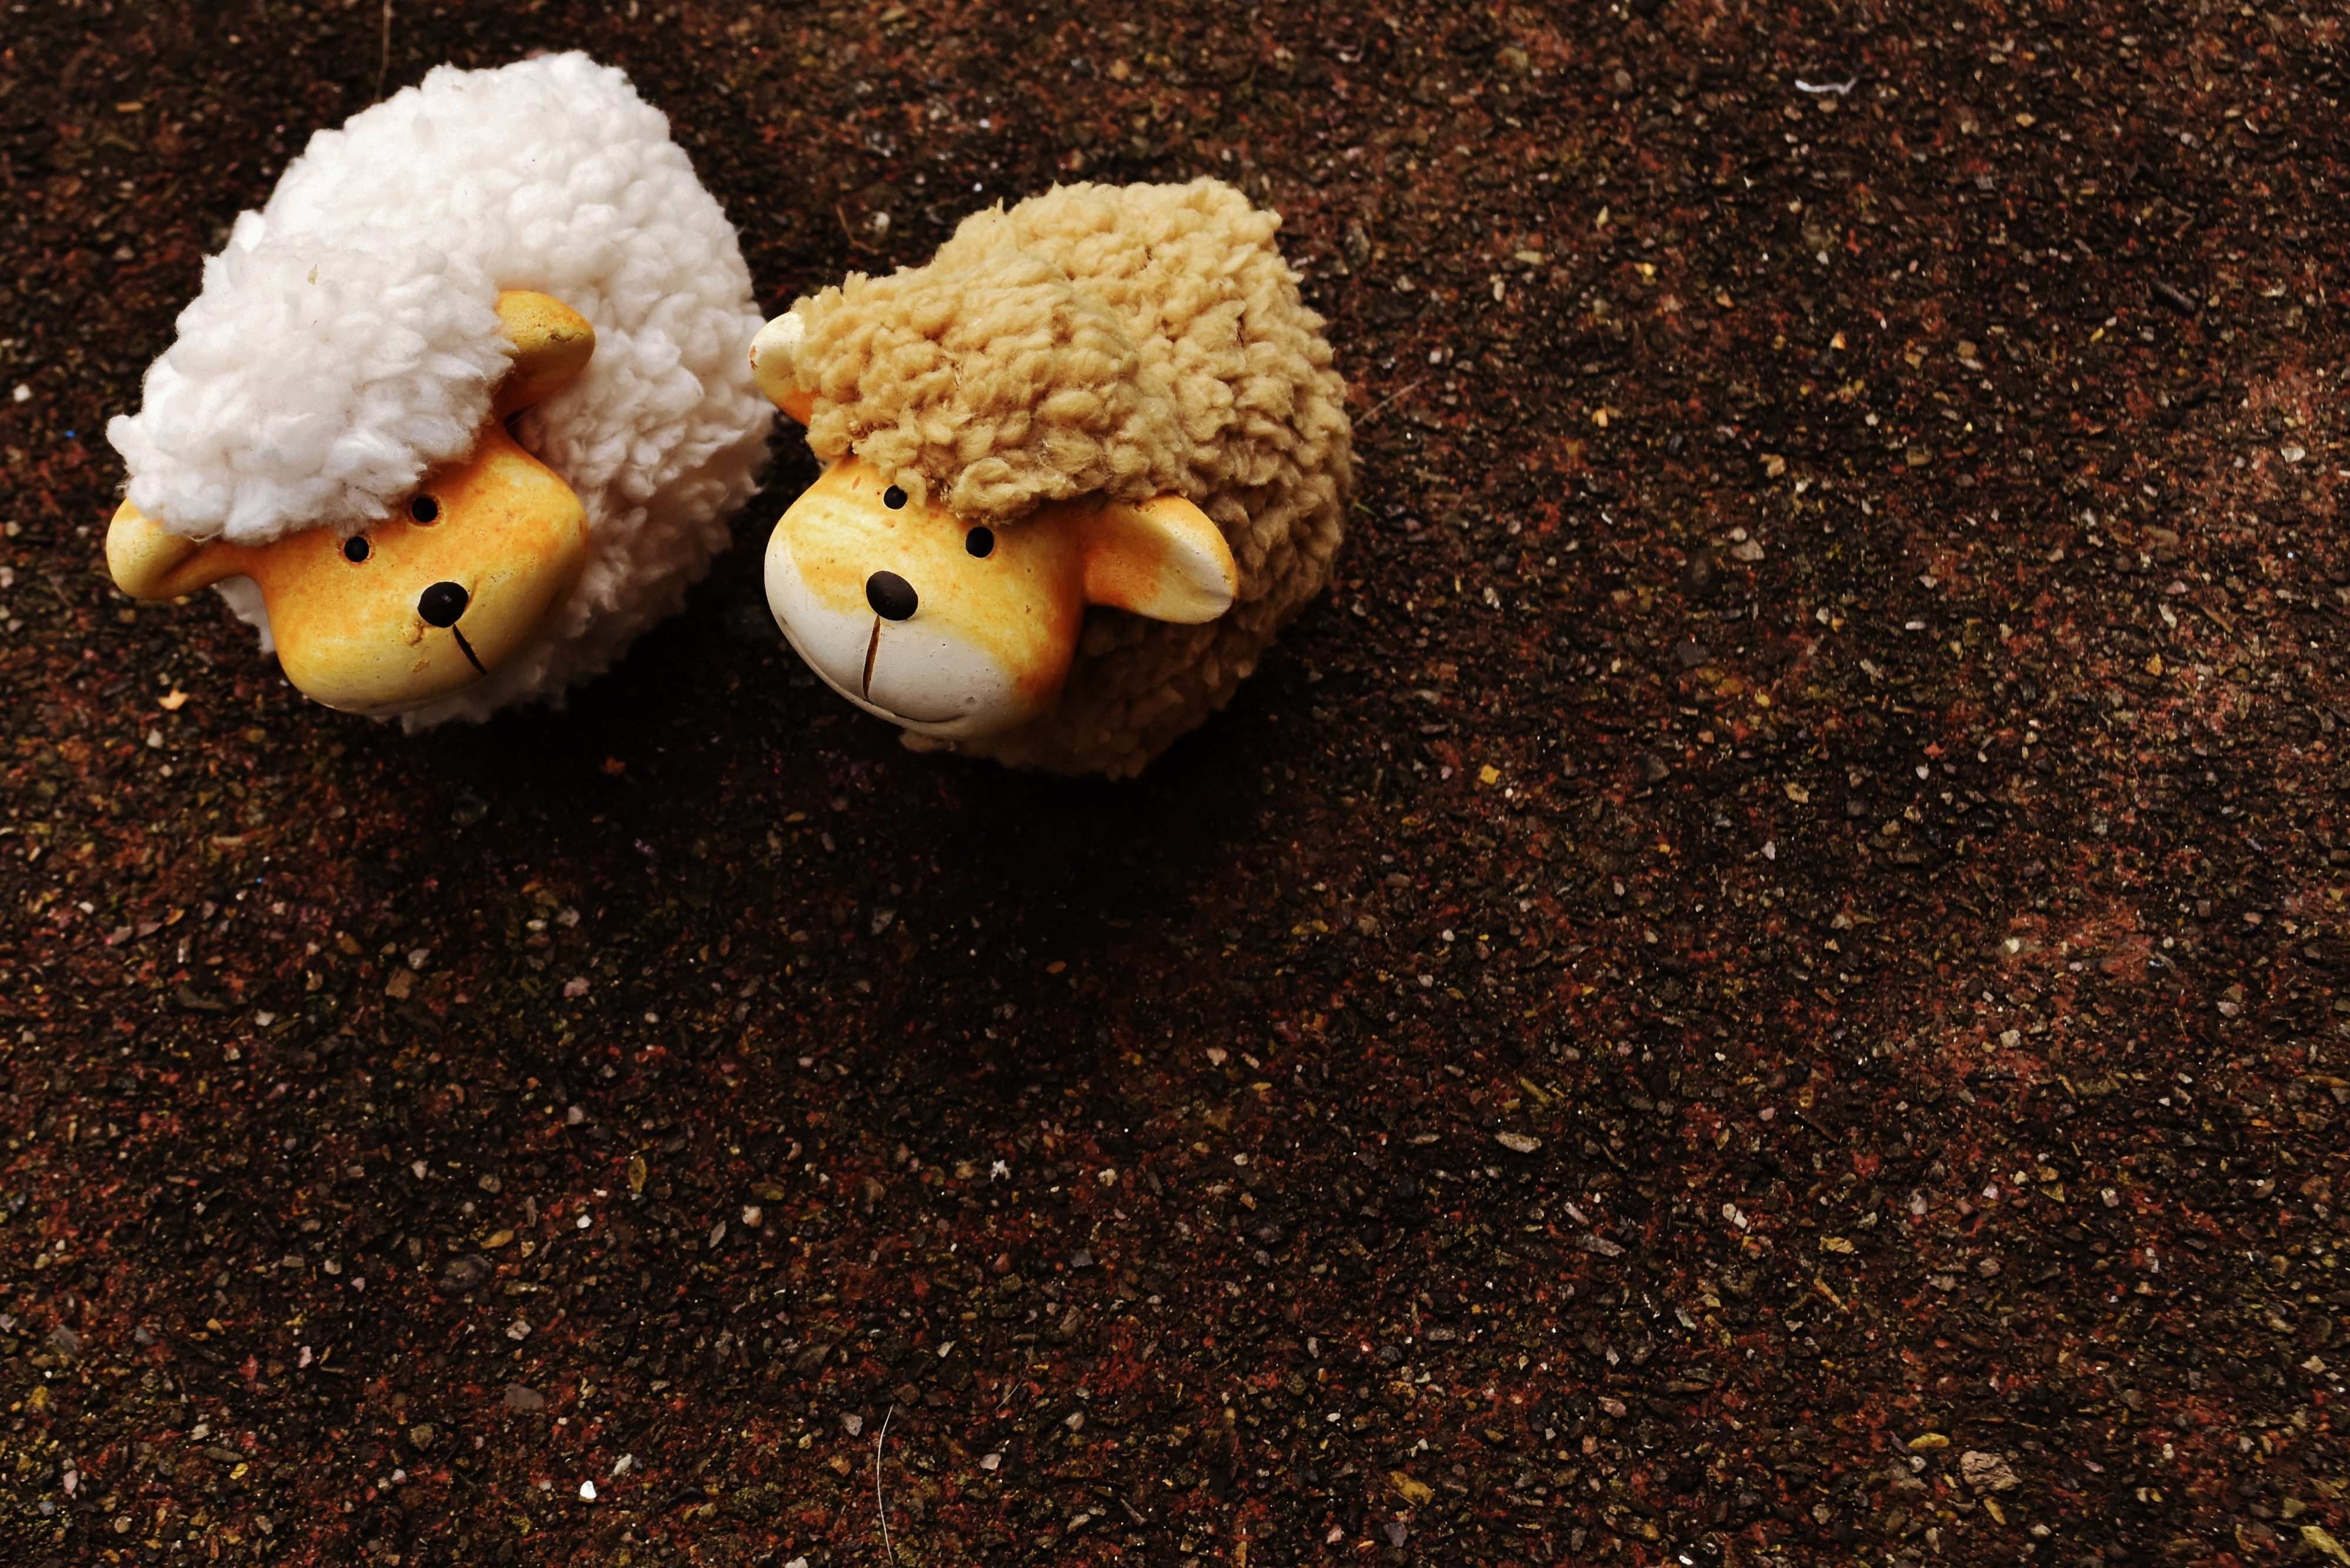 two sheep plush toy